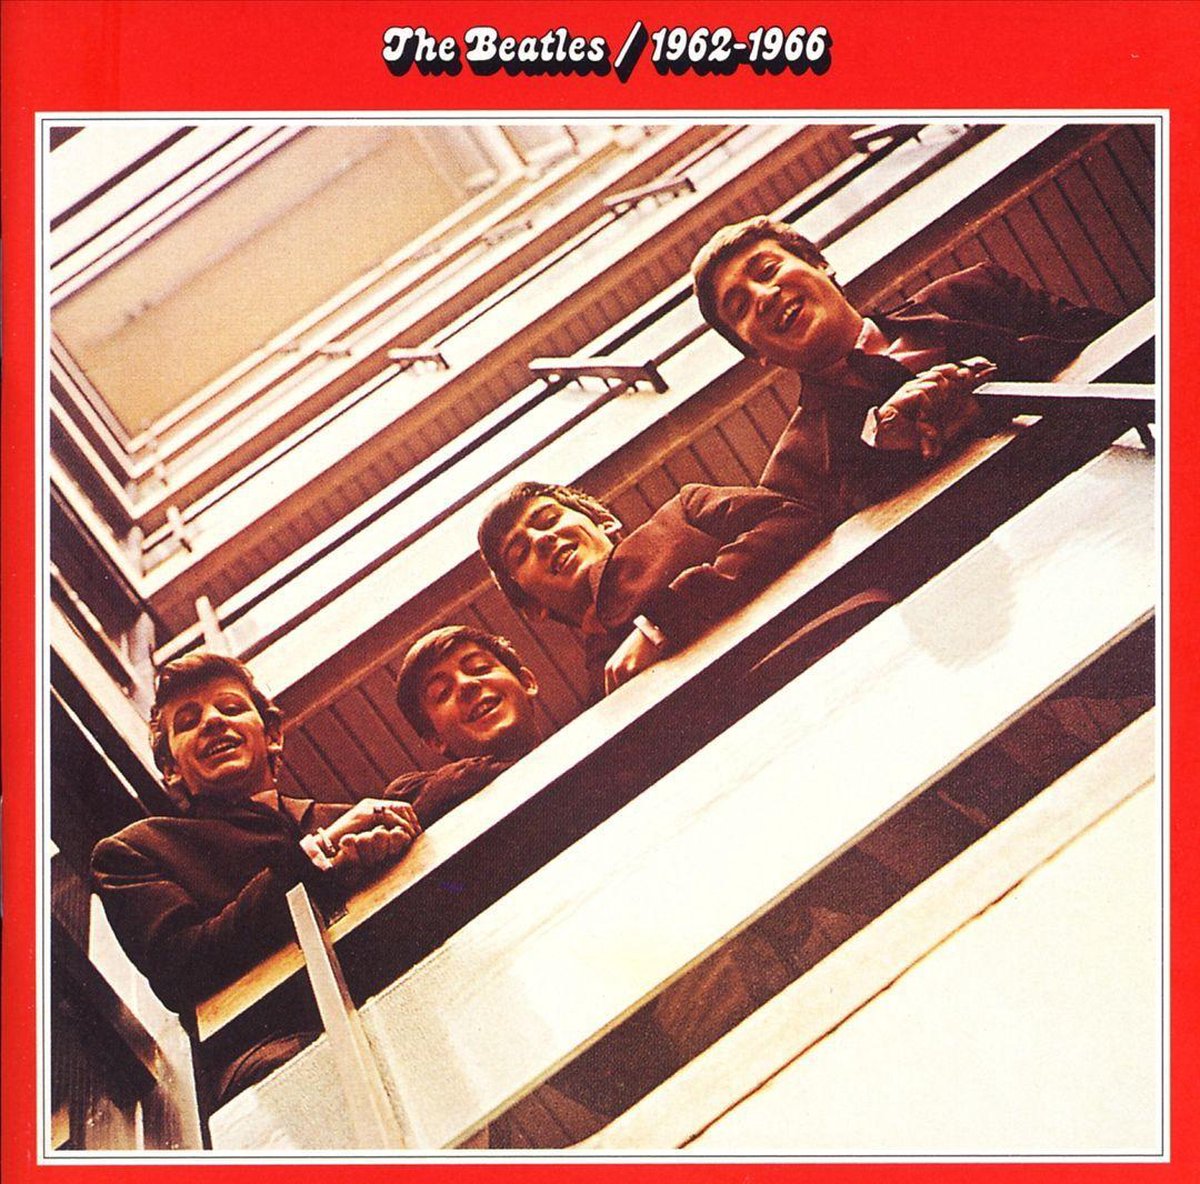 THE BEATLES - 1962-1966 (Red) - 2LP - 180g Vinyl